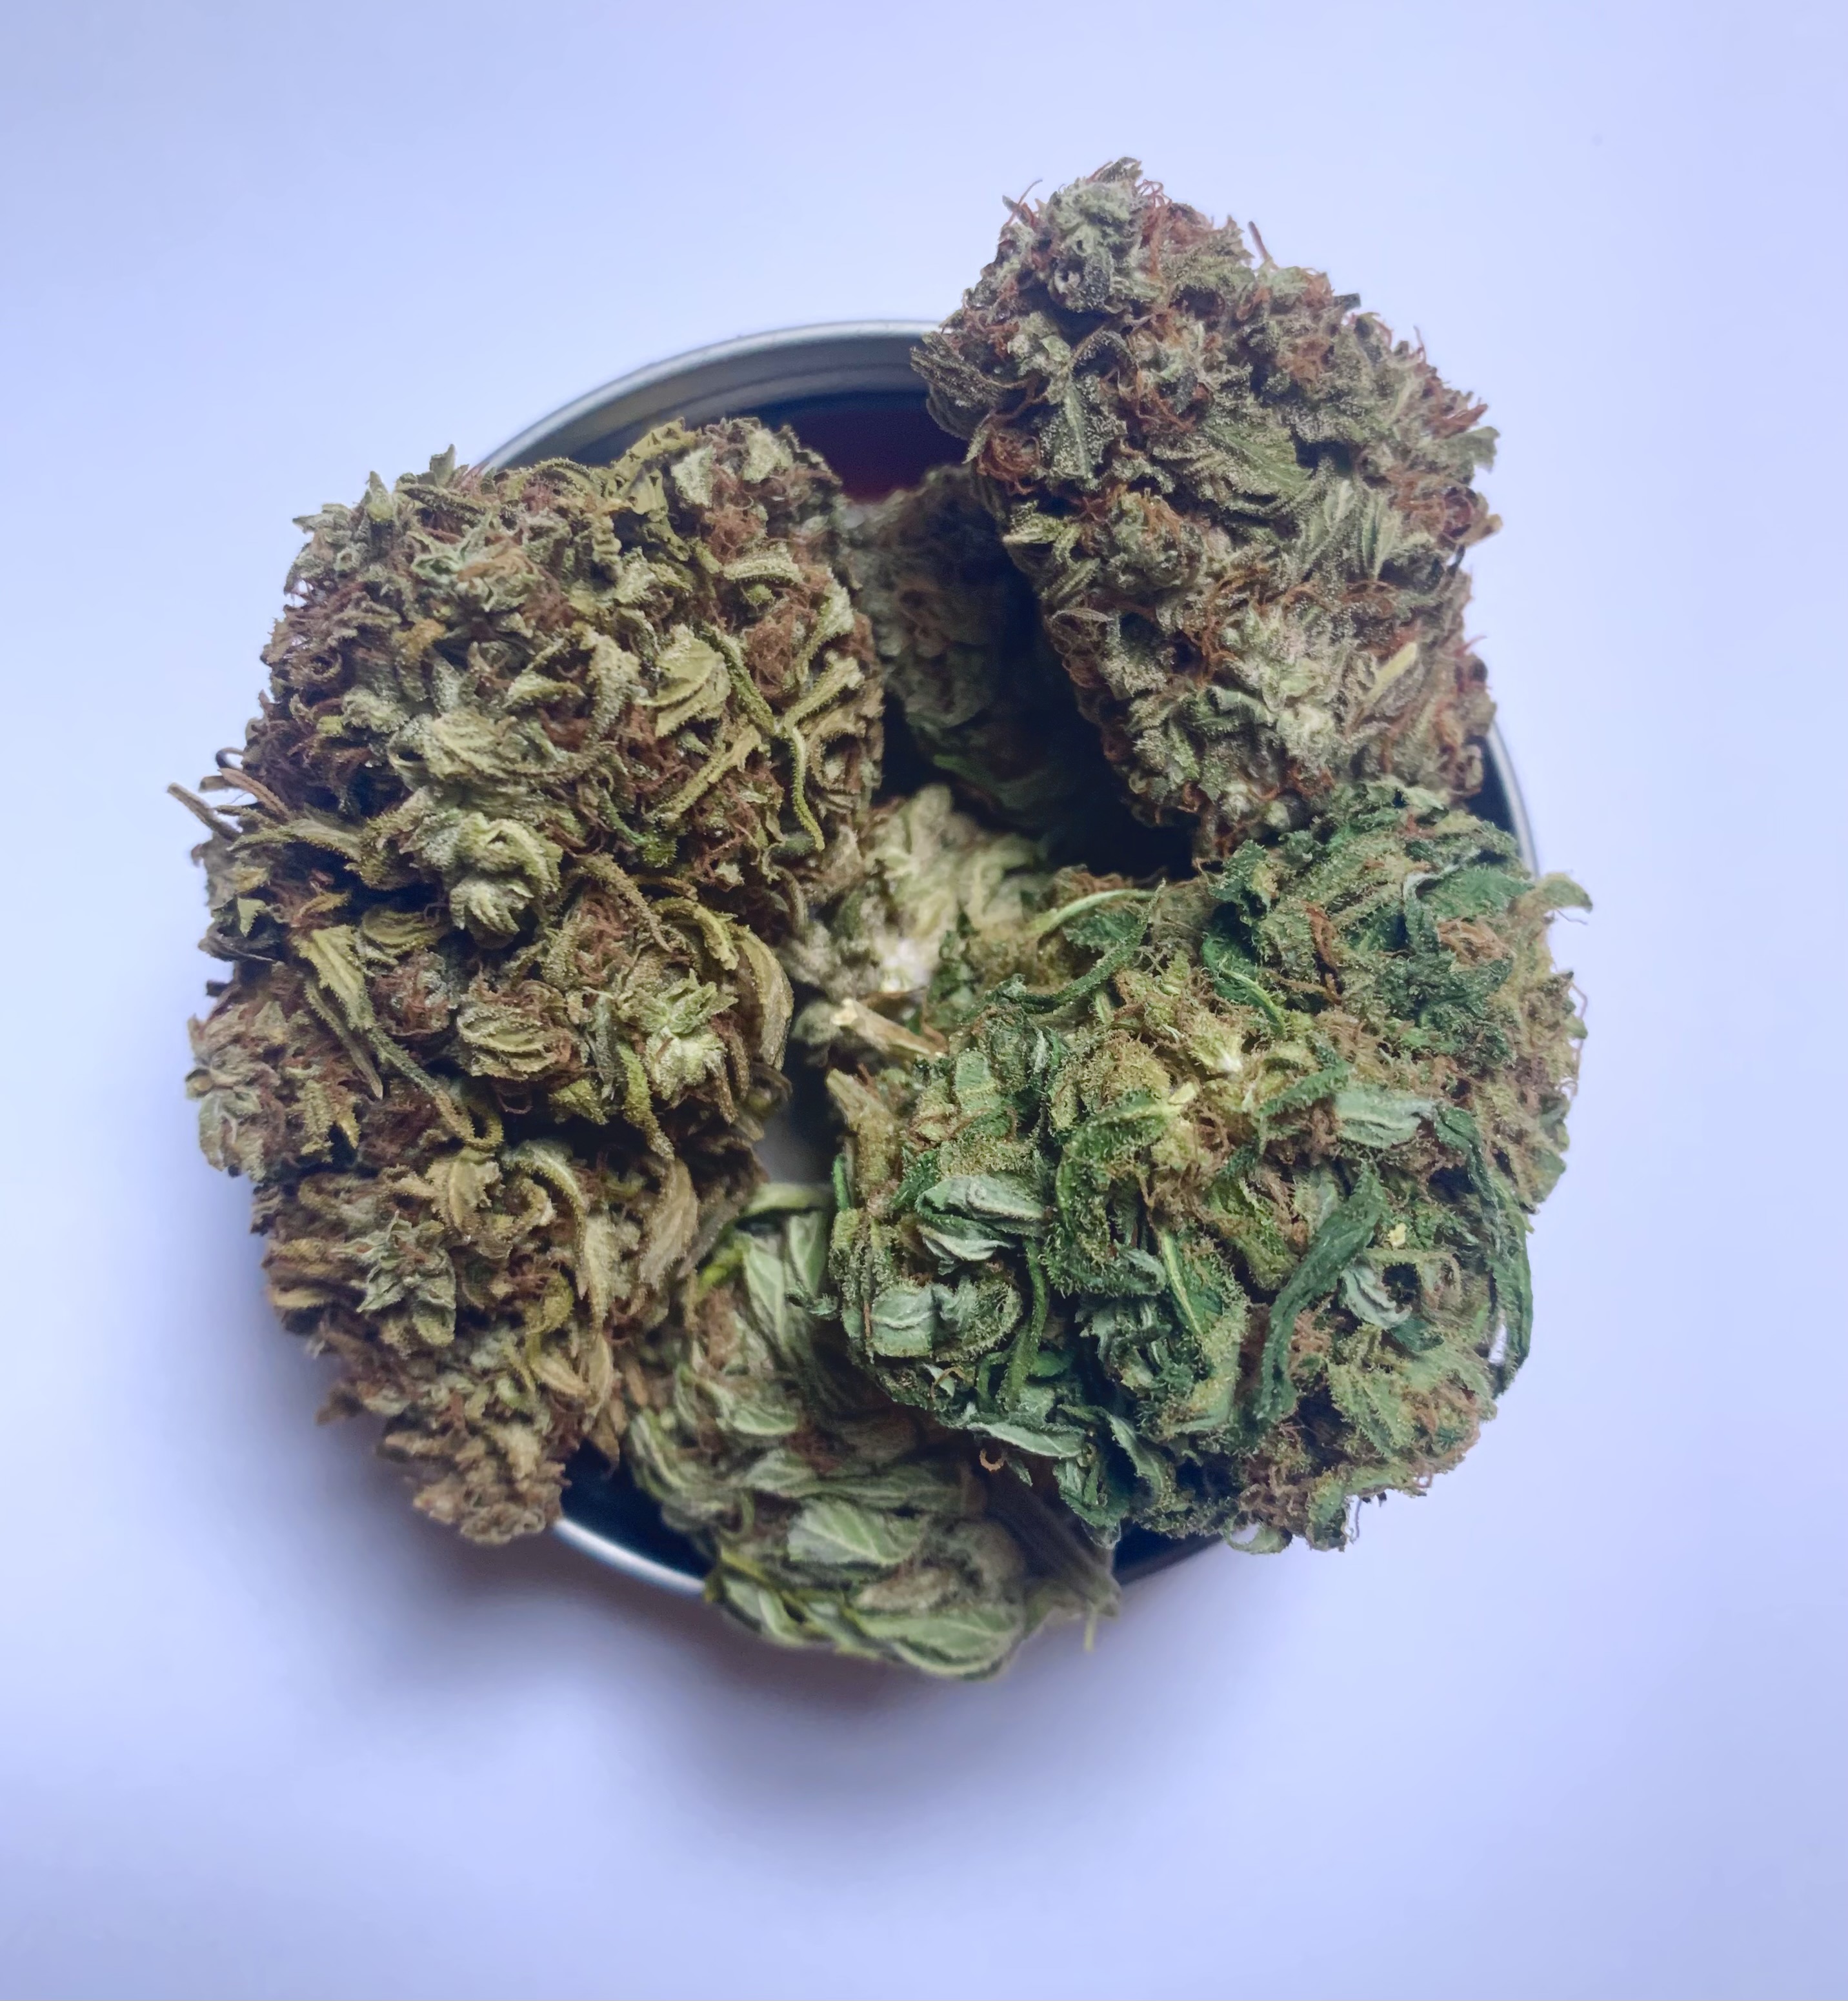 Cbd hemp strain, Elektra, known for its piney, sweet aromas.